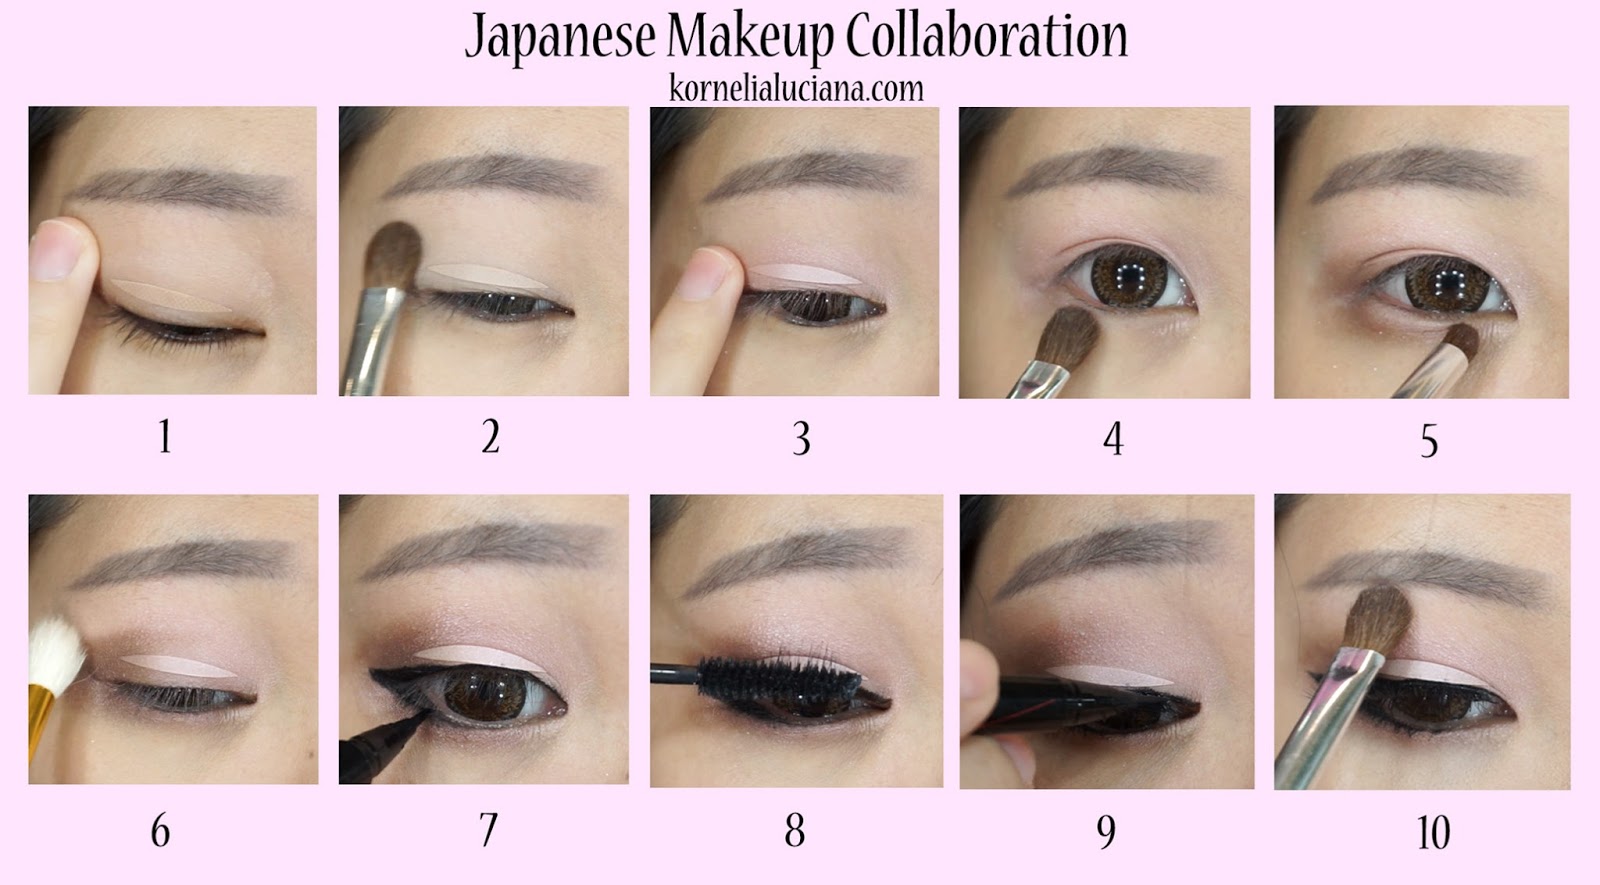 Japanese Makeup Collaboration Beautiesquad Kornelia Luciana